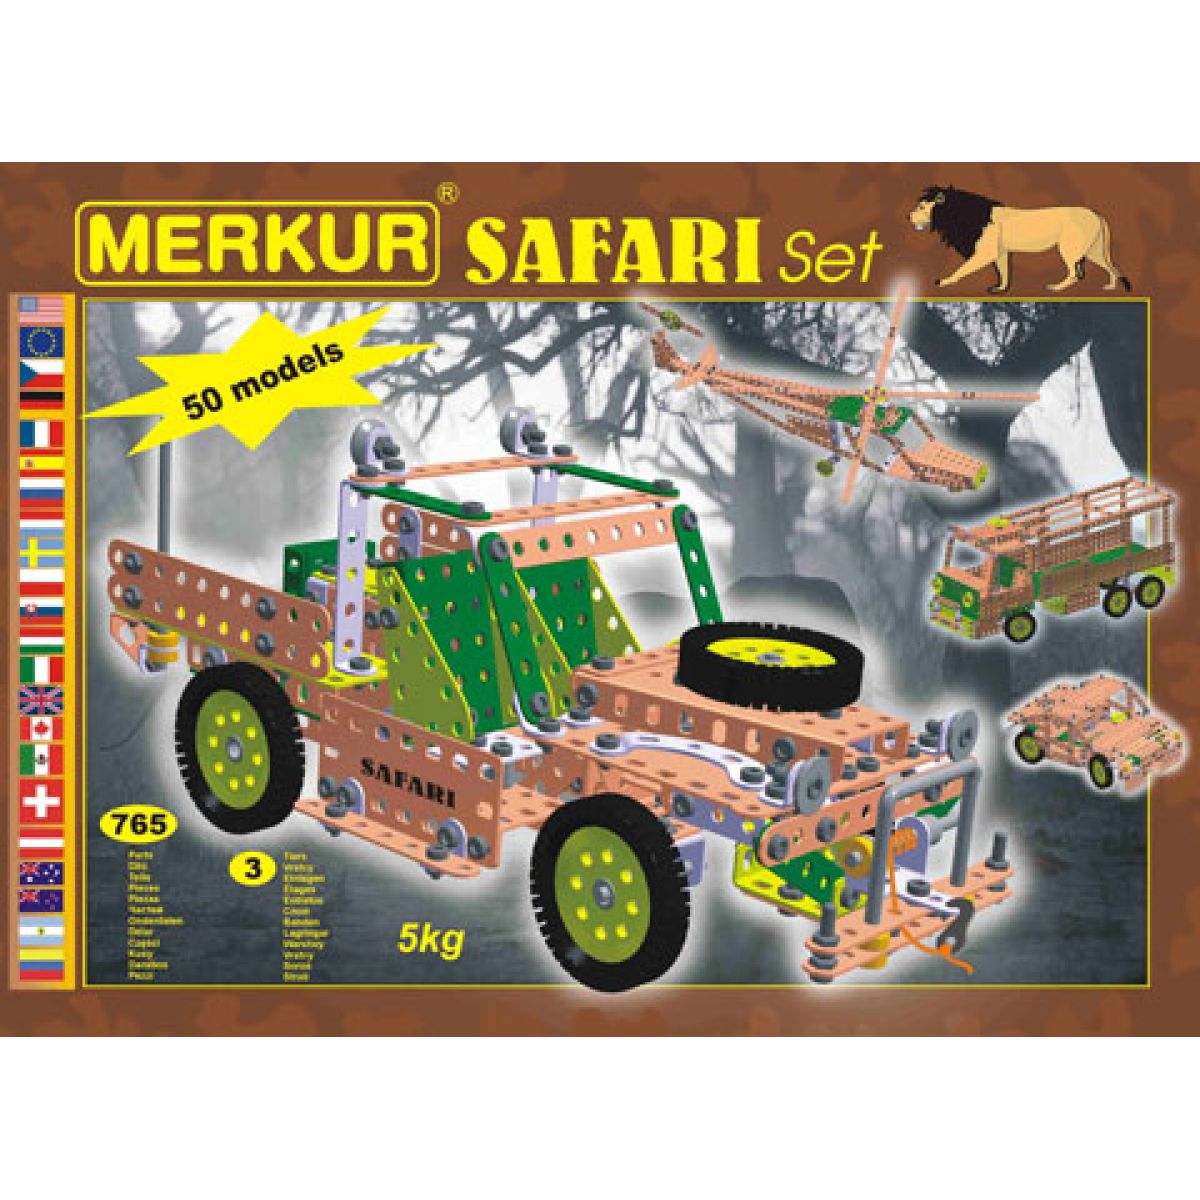 Merkur Safari